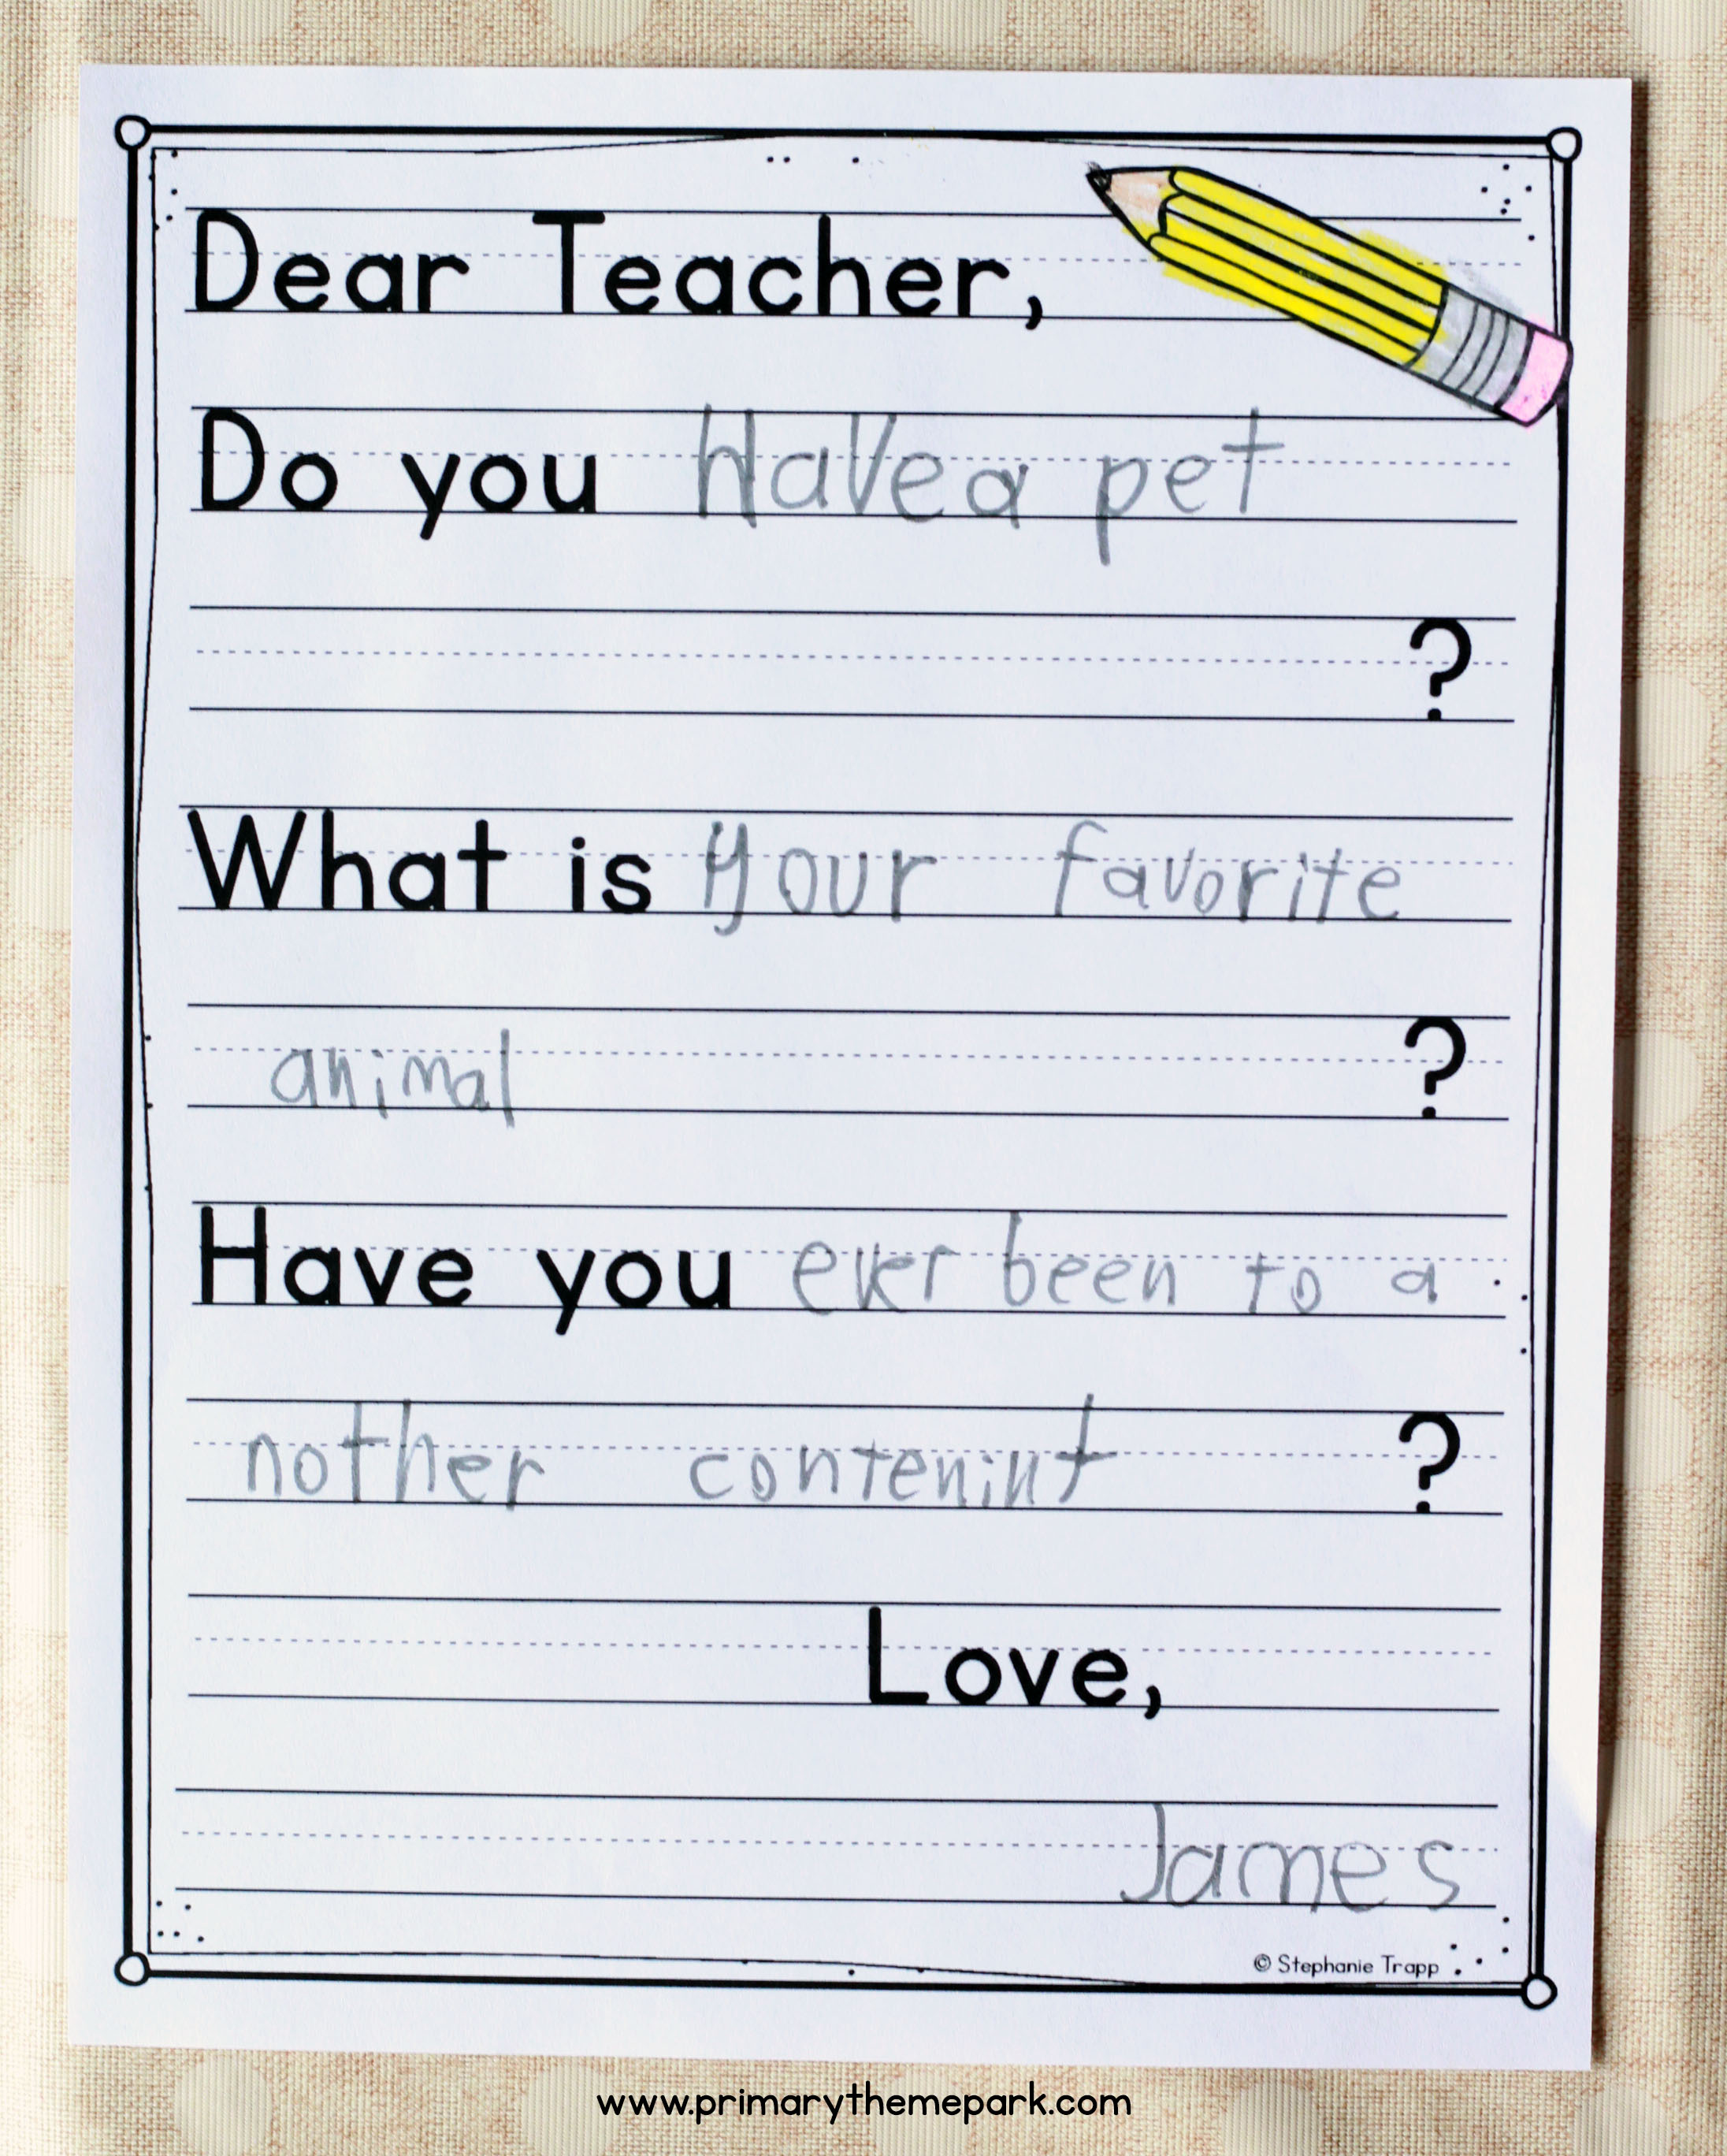 creative writing prompts primary school